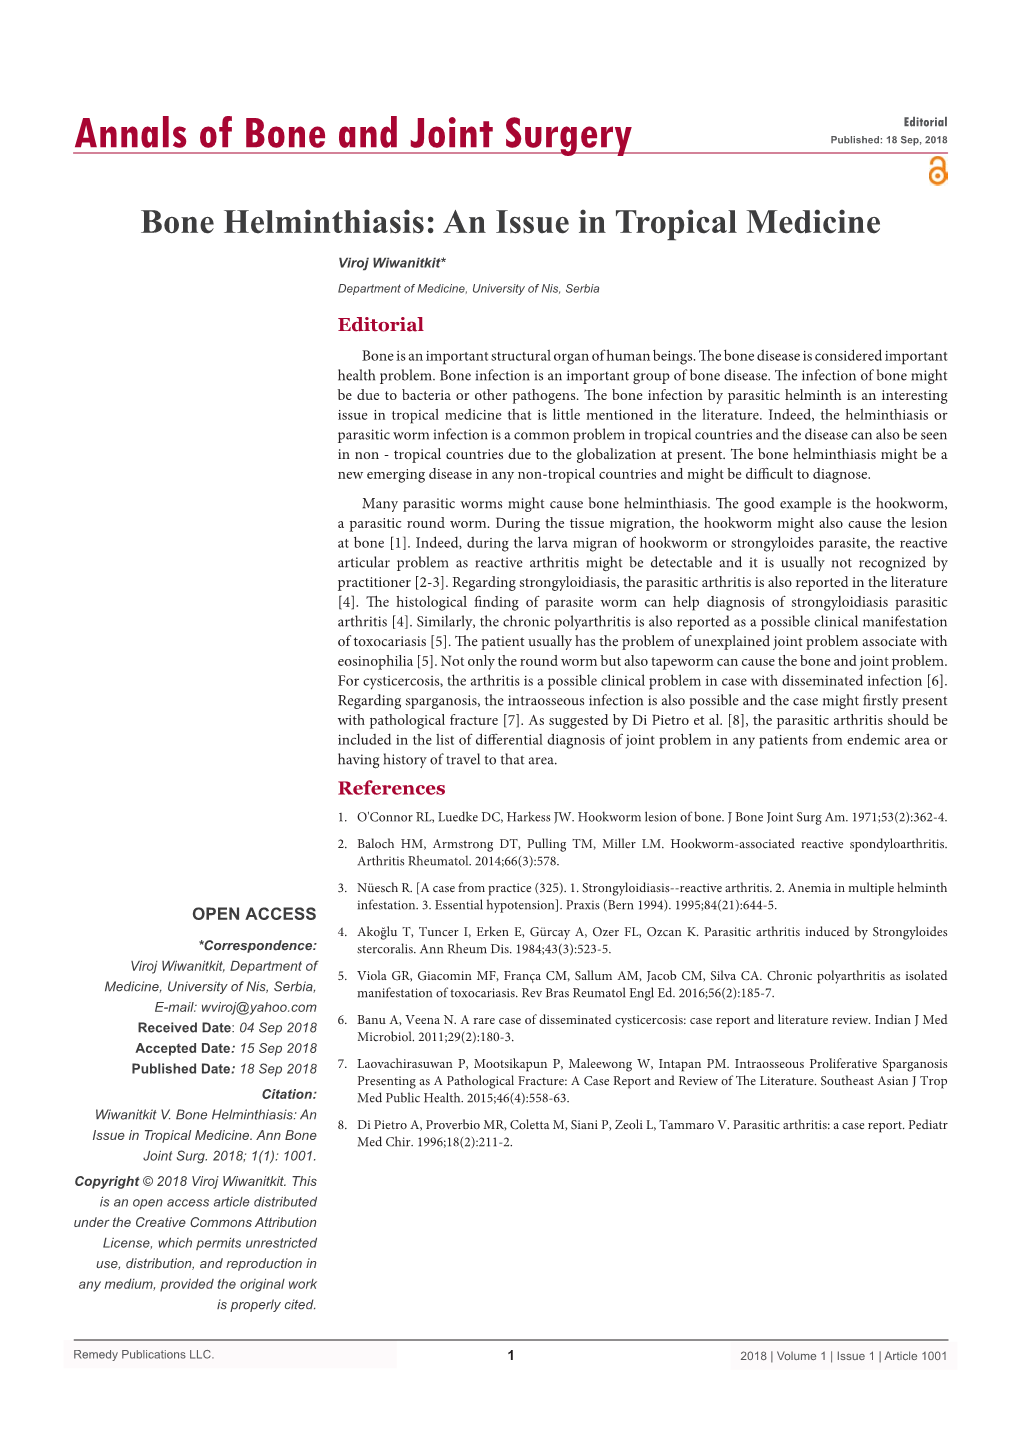 Bone Helminthiasis: an Issue in Tropical Medicine